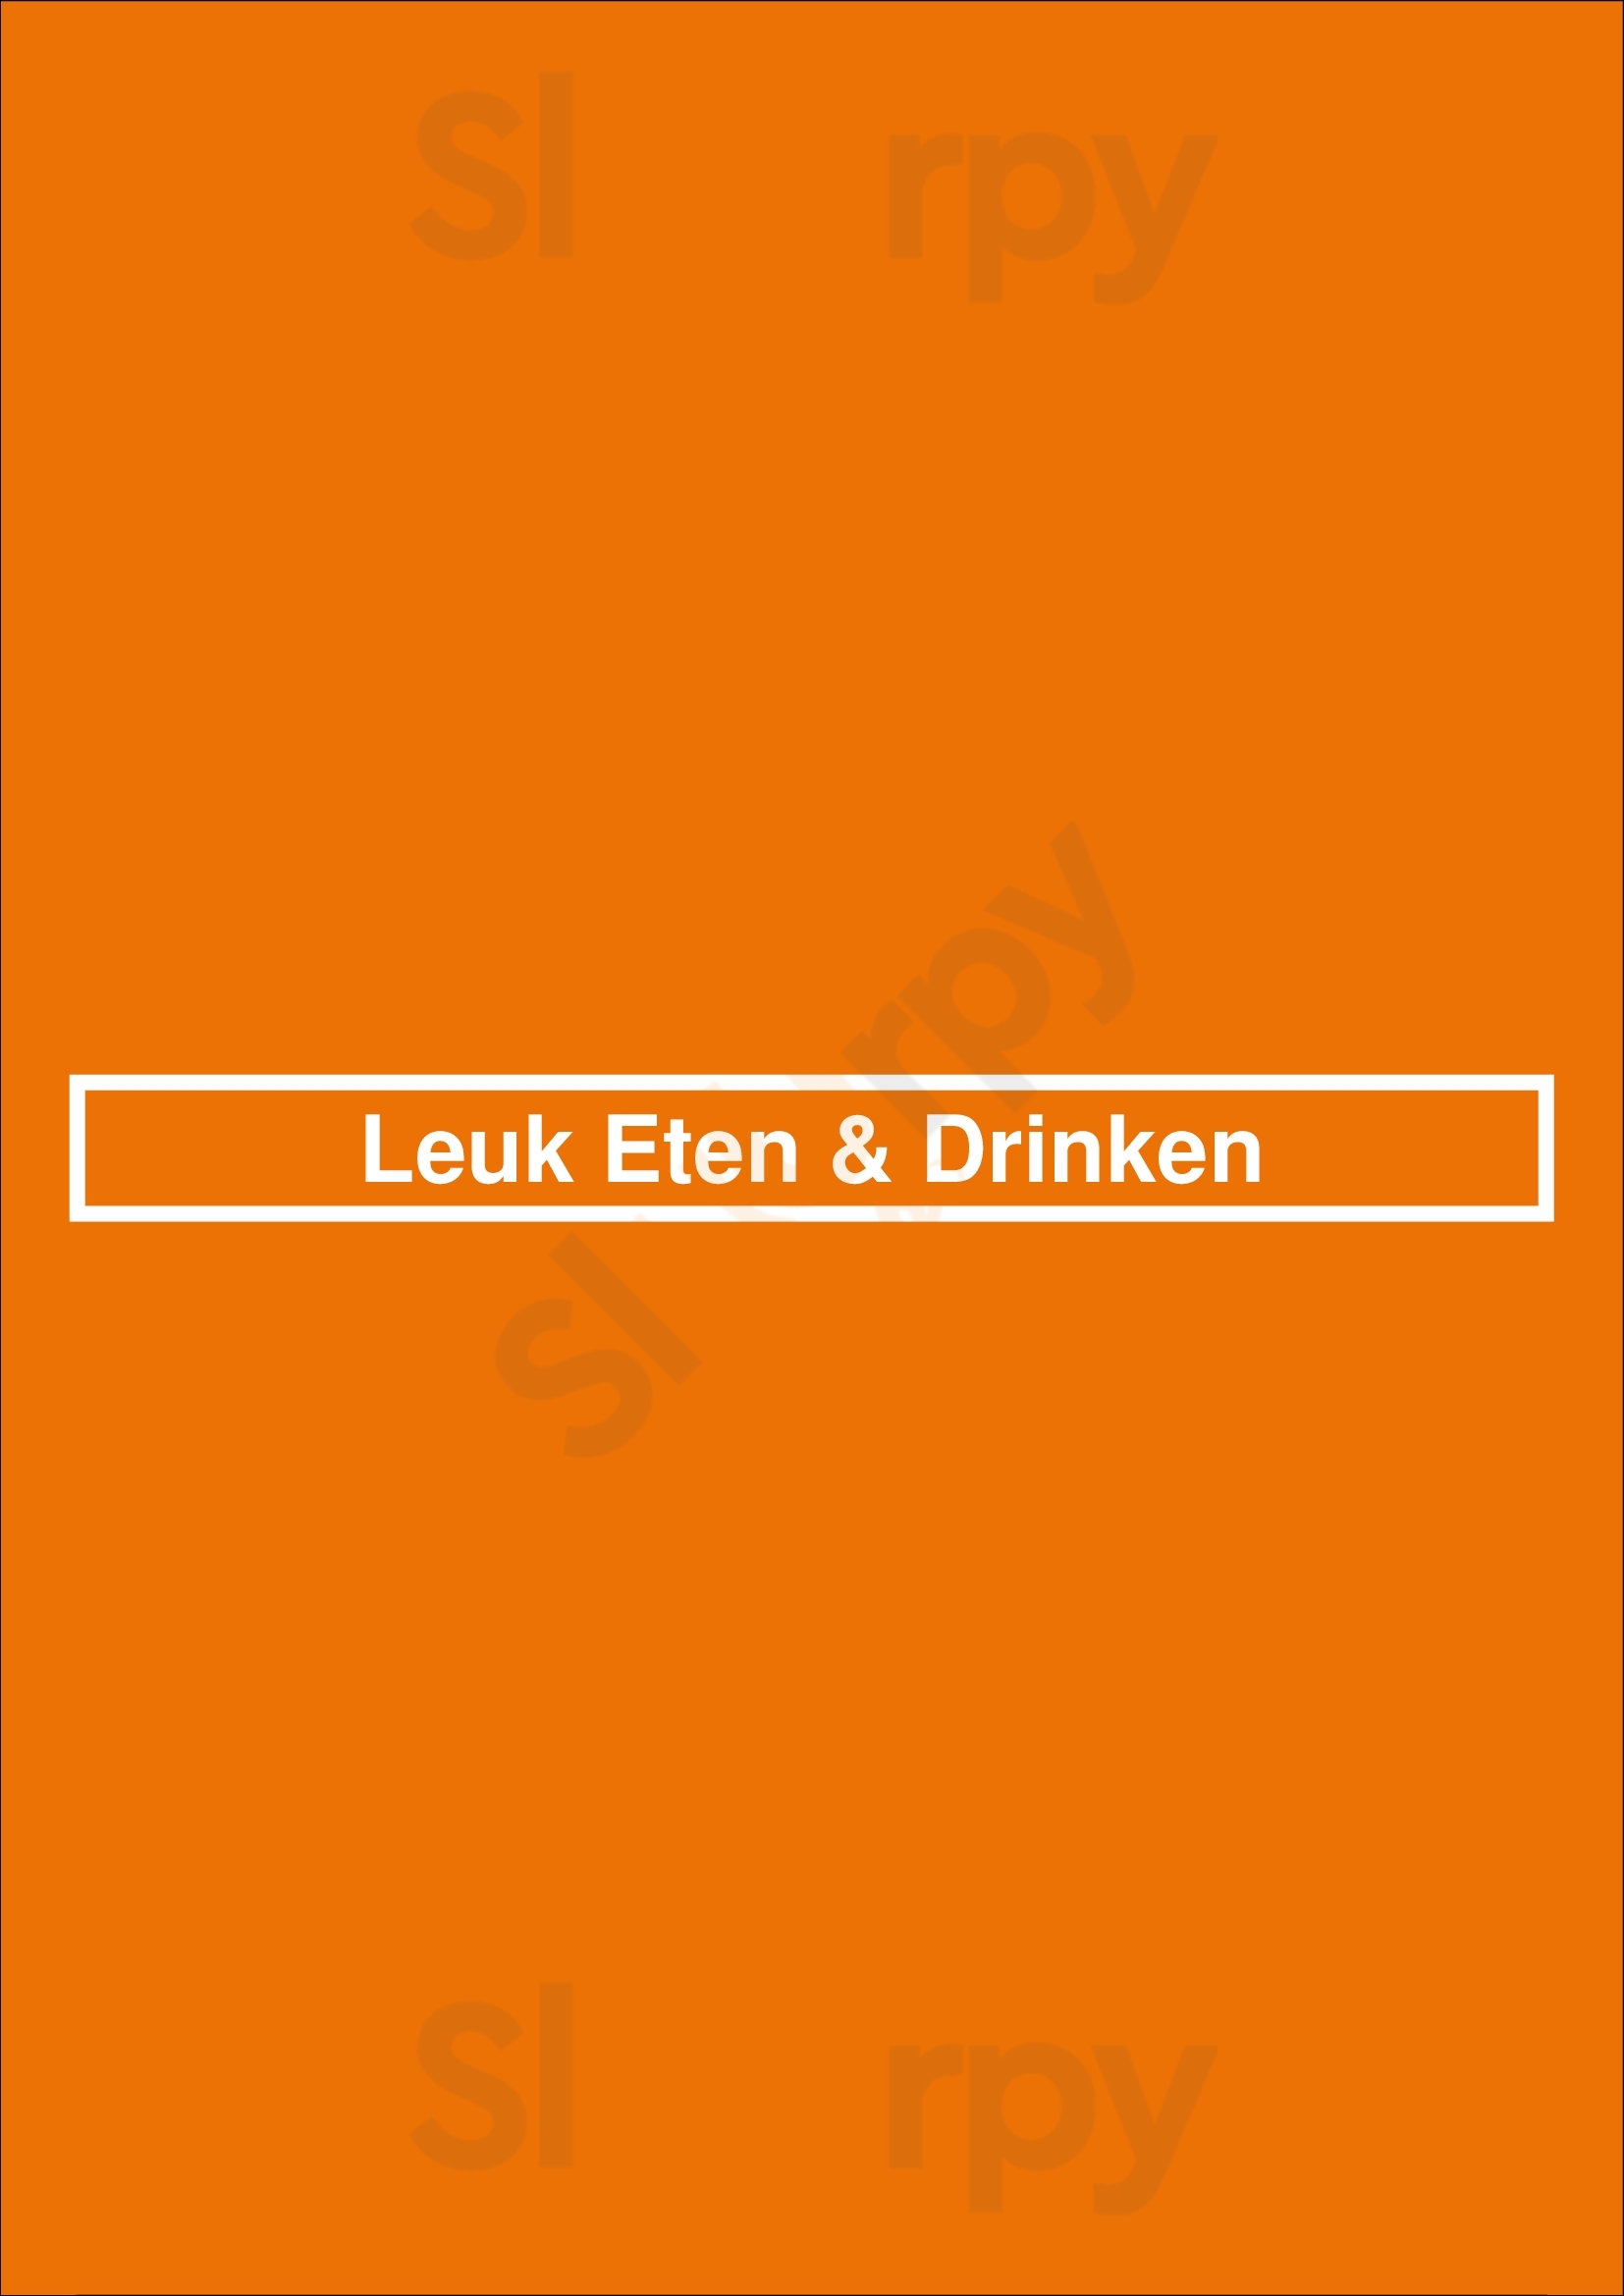 Leuk Eten & Drinken Rotterdam Menu - 1